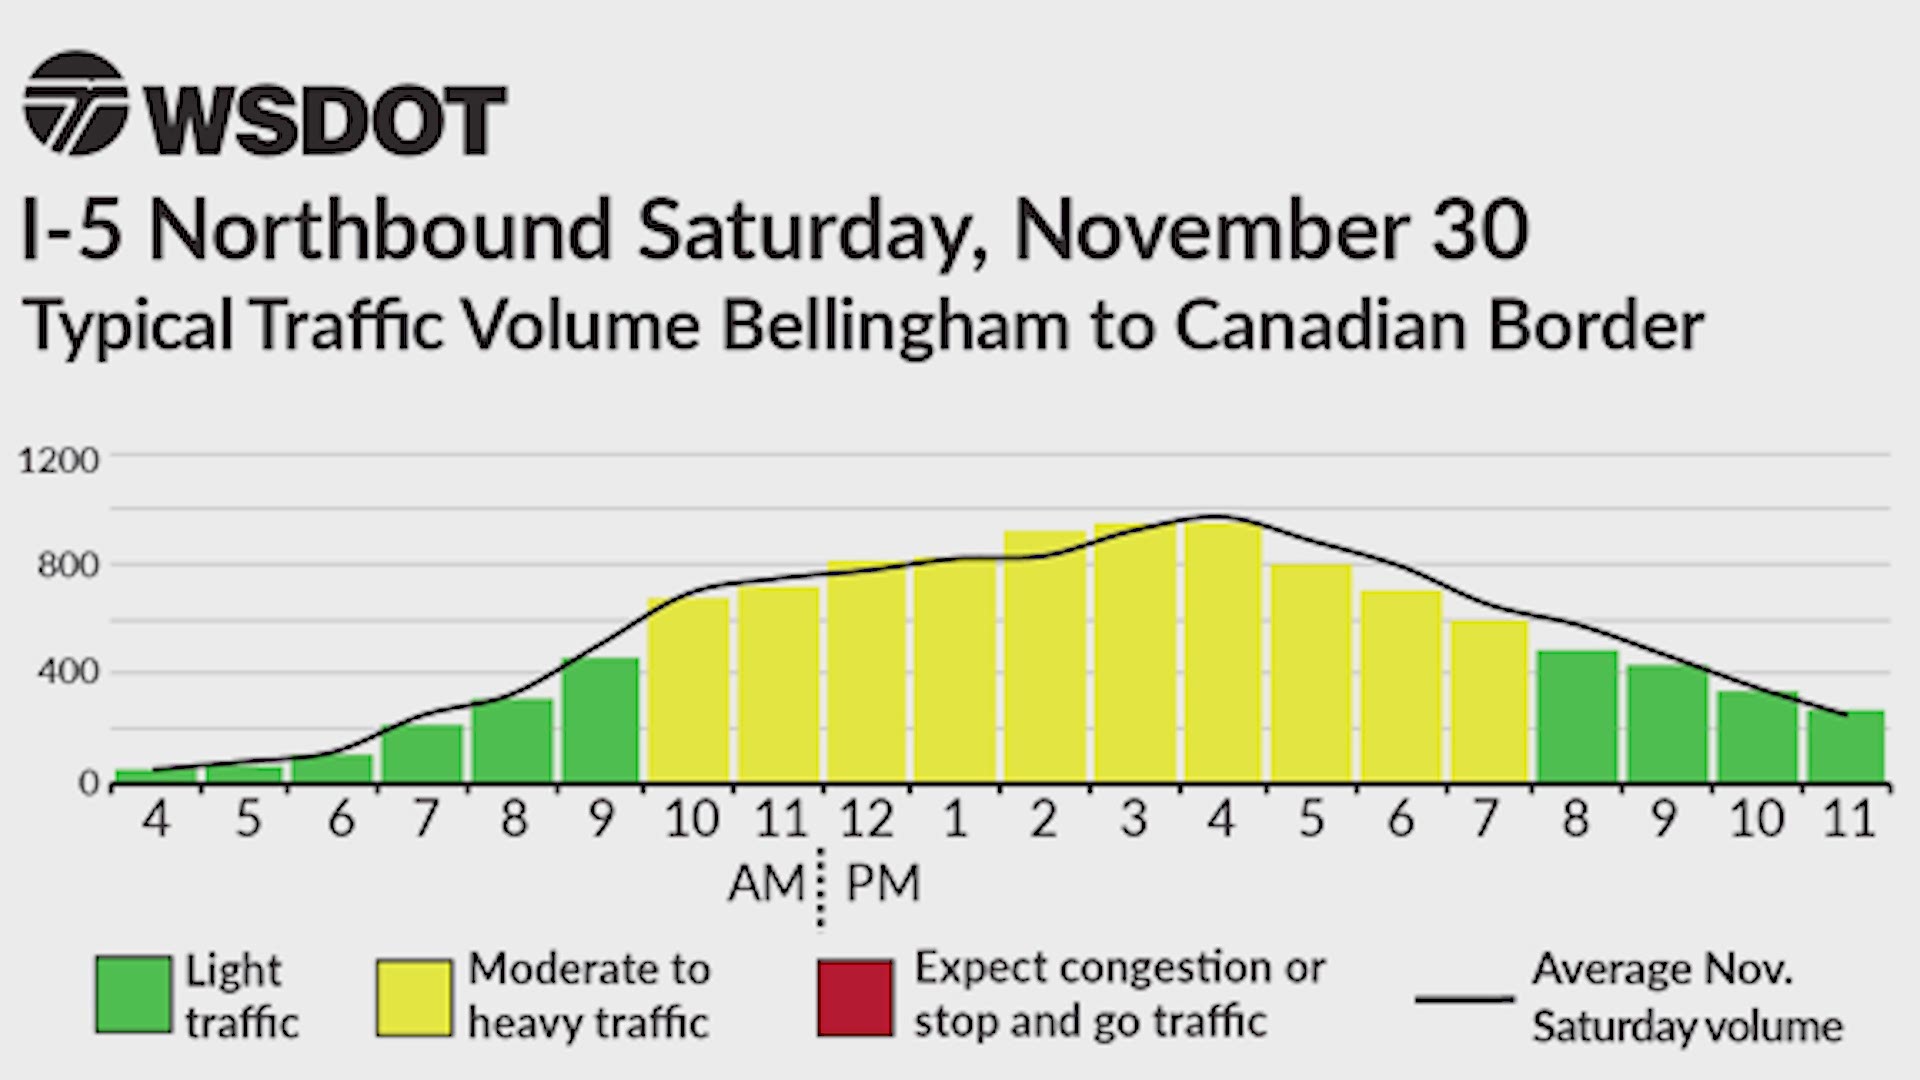 WSDOT estimated traffic volumes for Saturday, November 30th